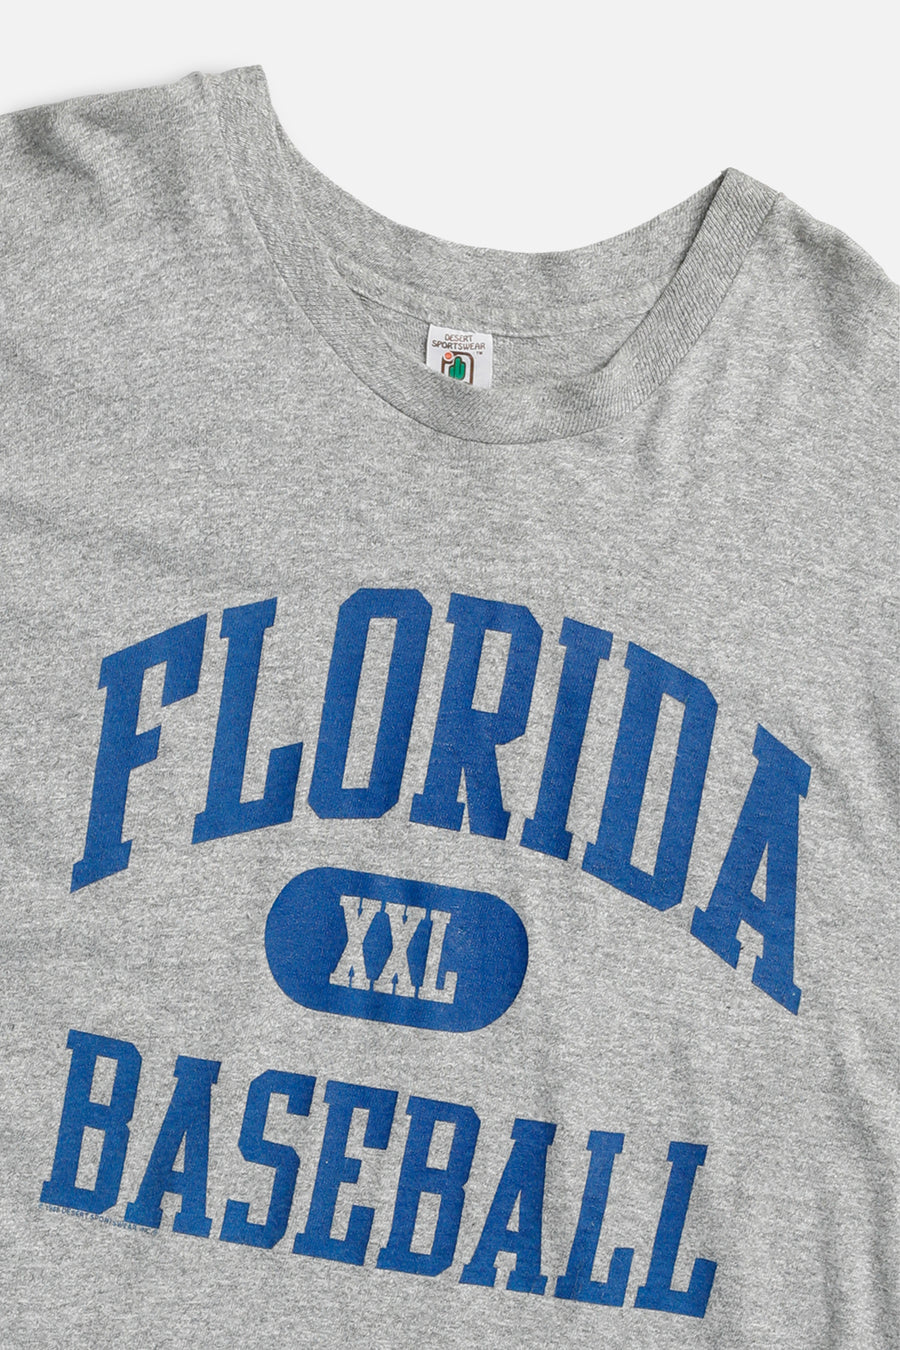 Vintage Florida Baseball Tee - XXL